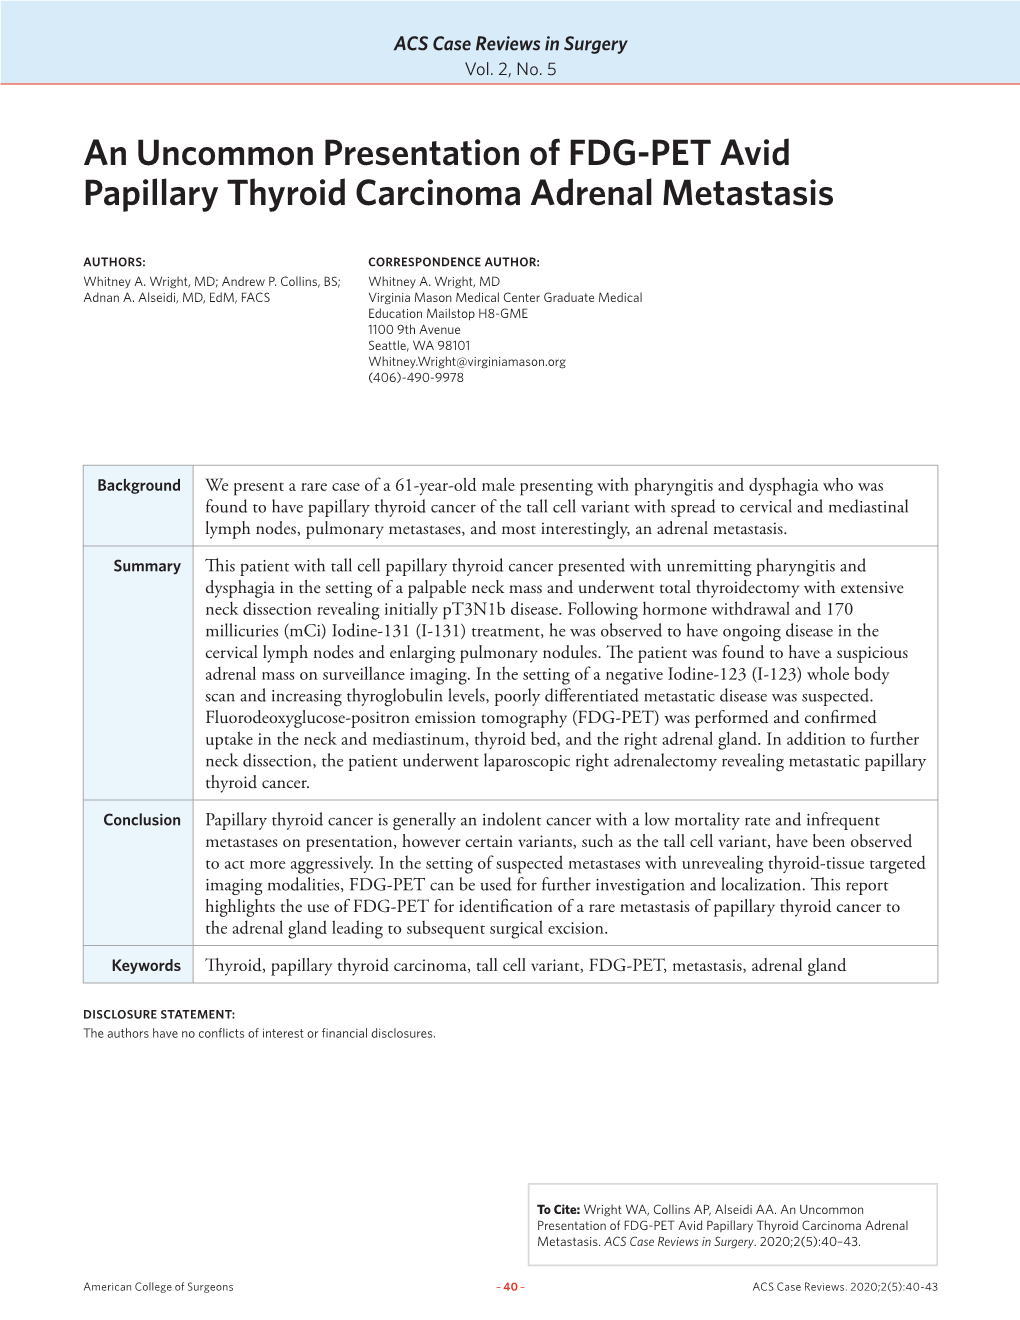 An Uncommon Presentation of FDG-PET Avid Papillary Thyroid Carcinoma Adrenal Metastasis